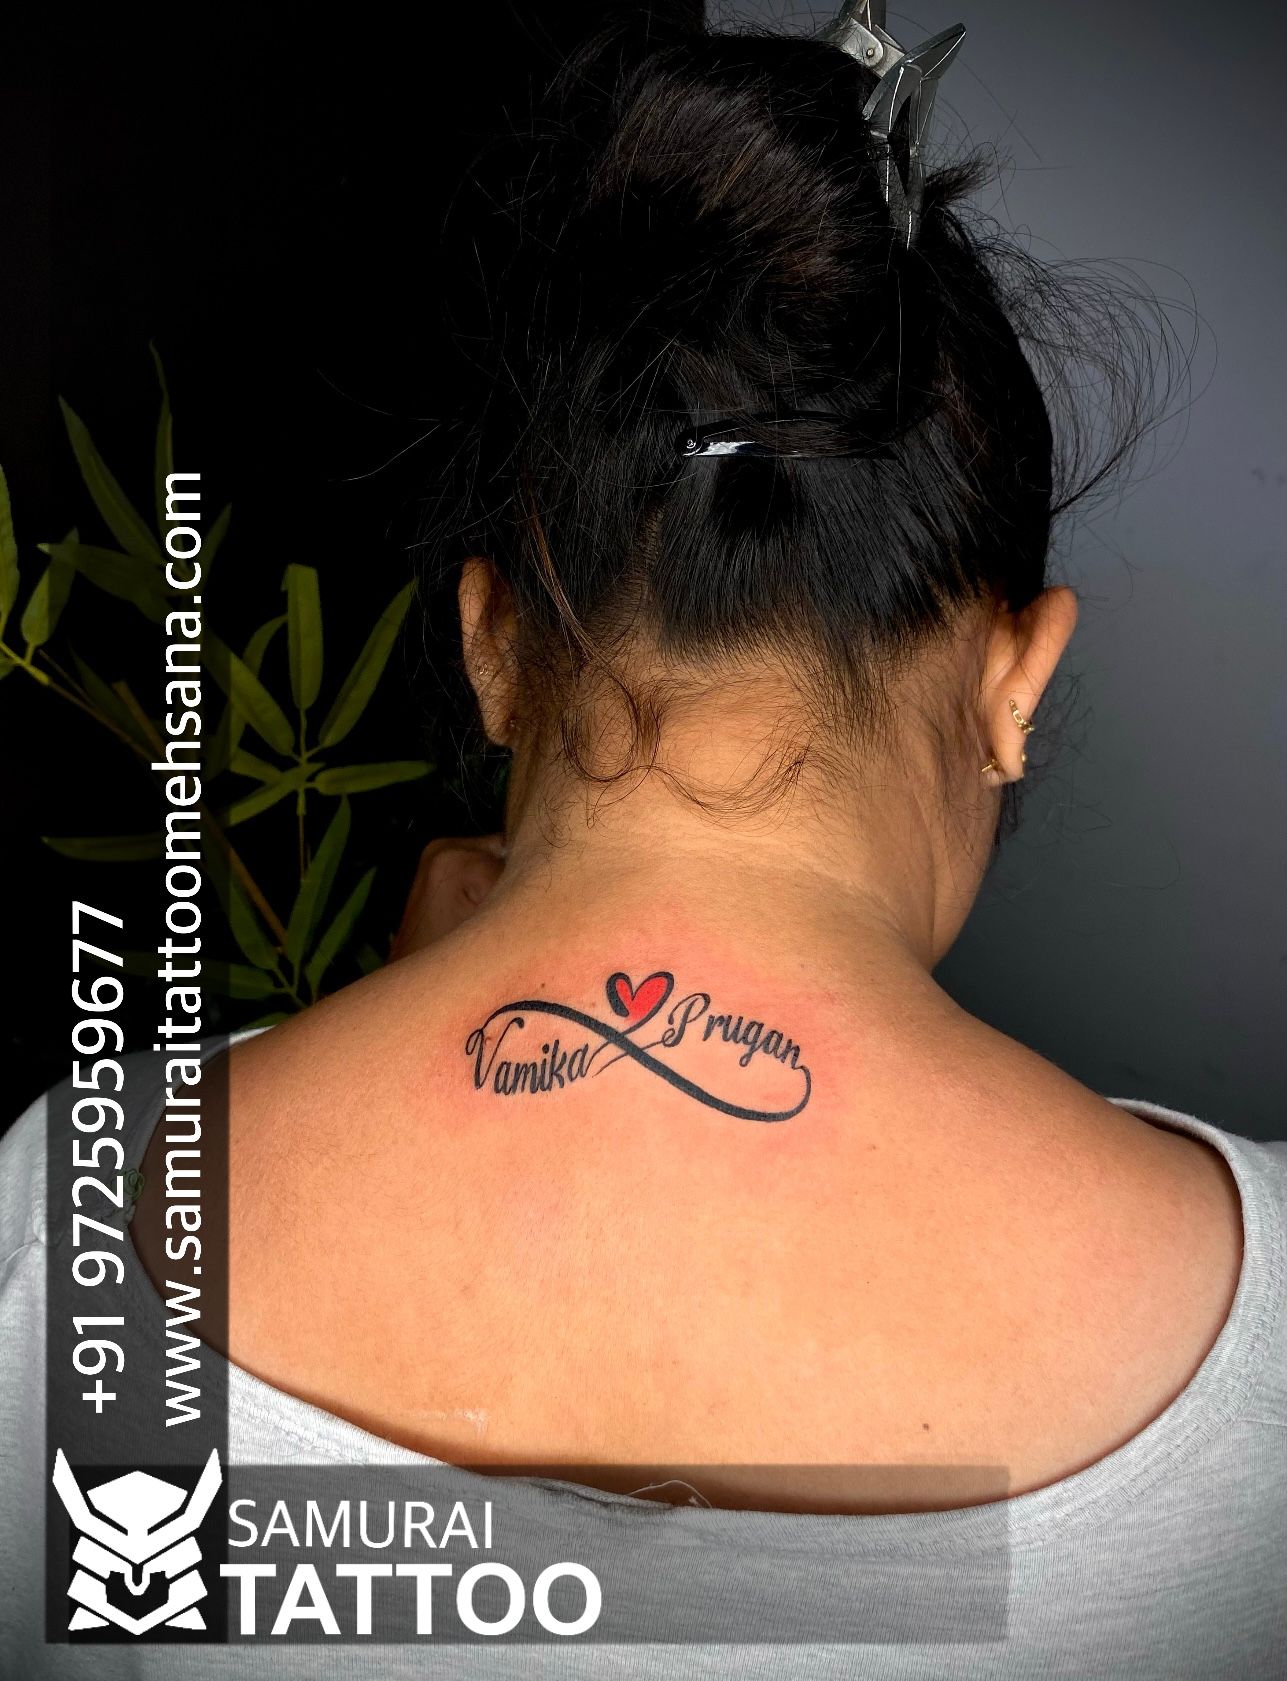 Tattoo uploaded by Vipul Chaudhary • Vamika name tattoo